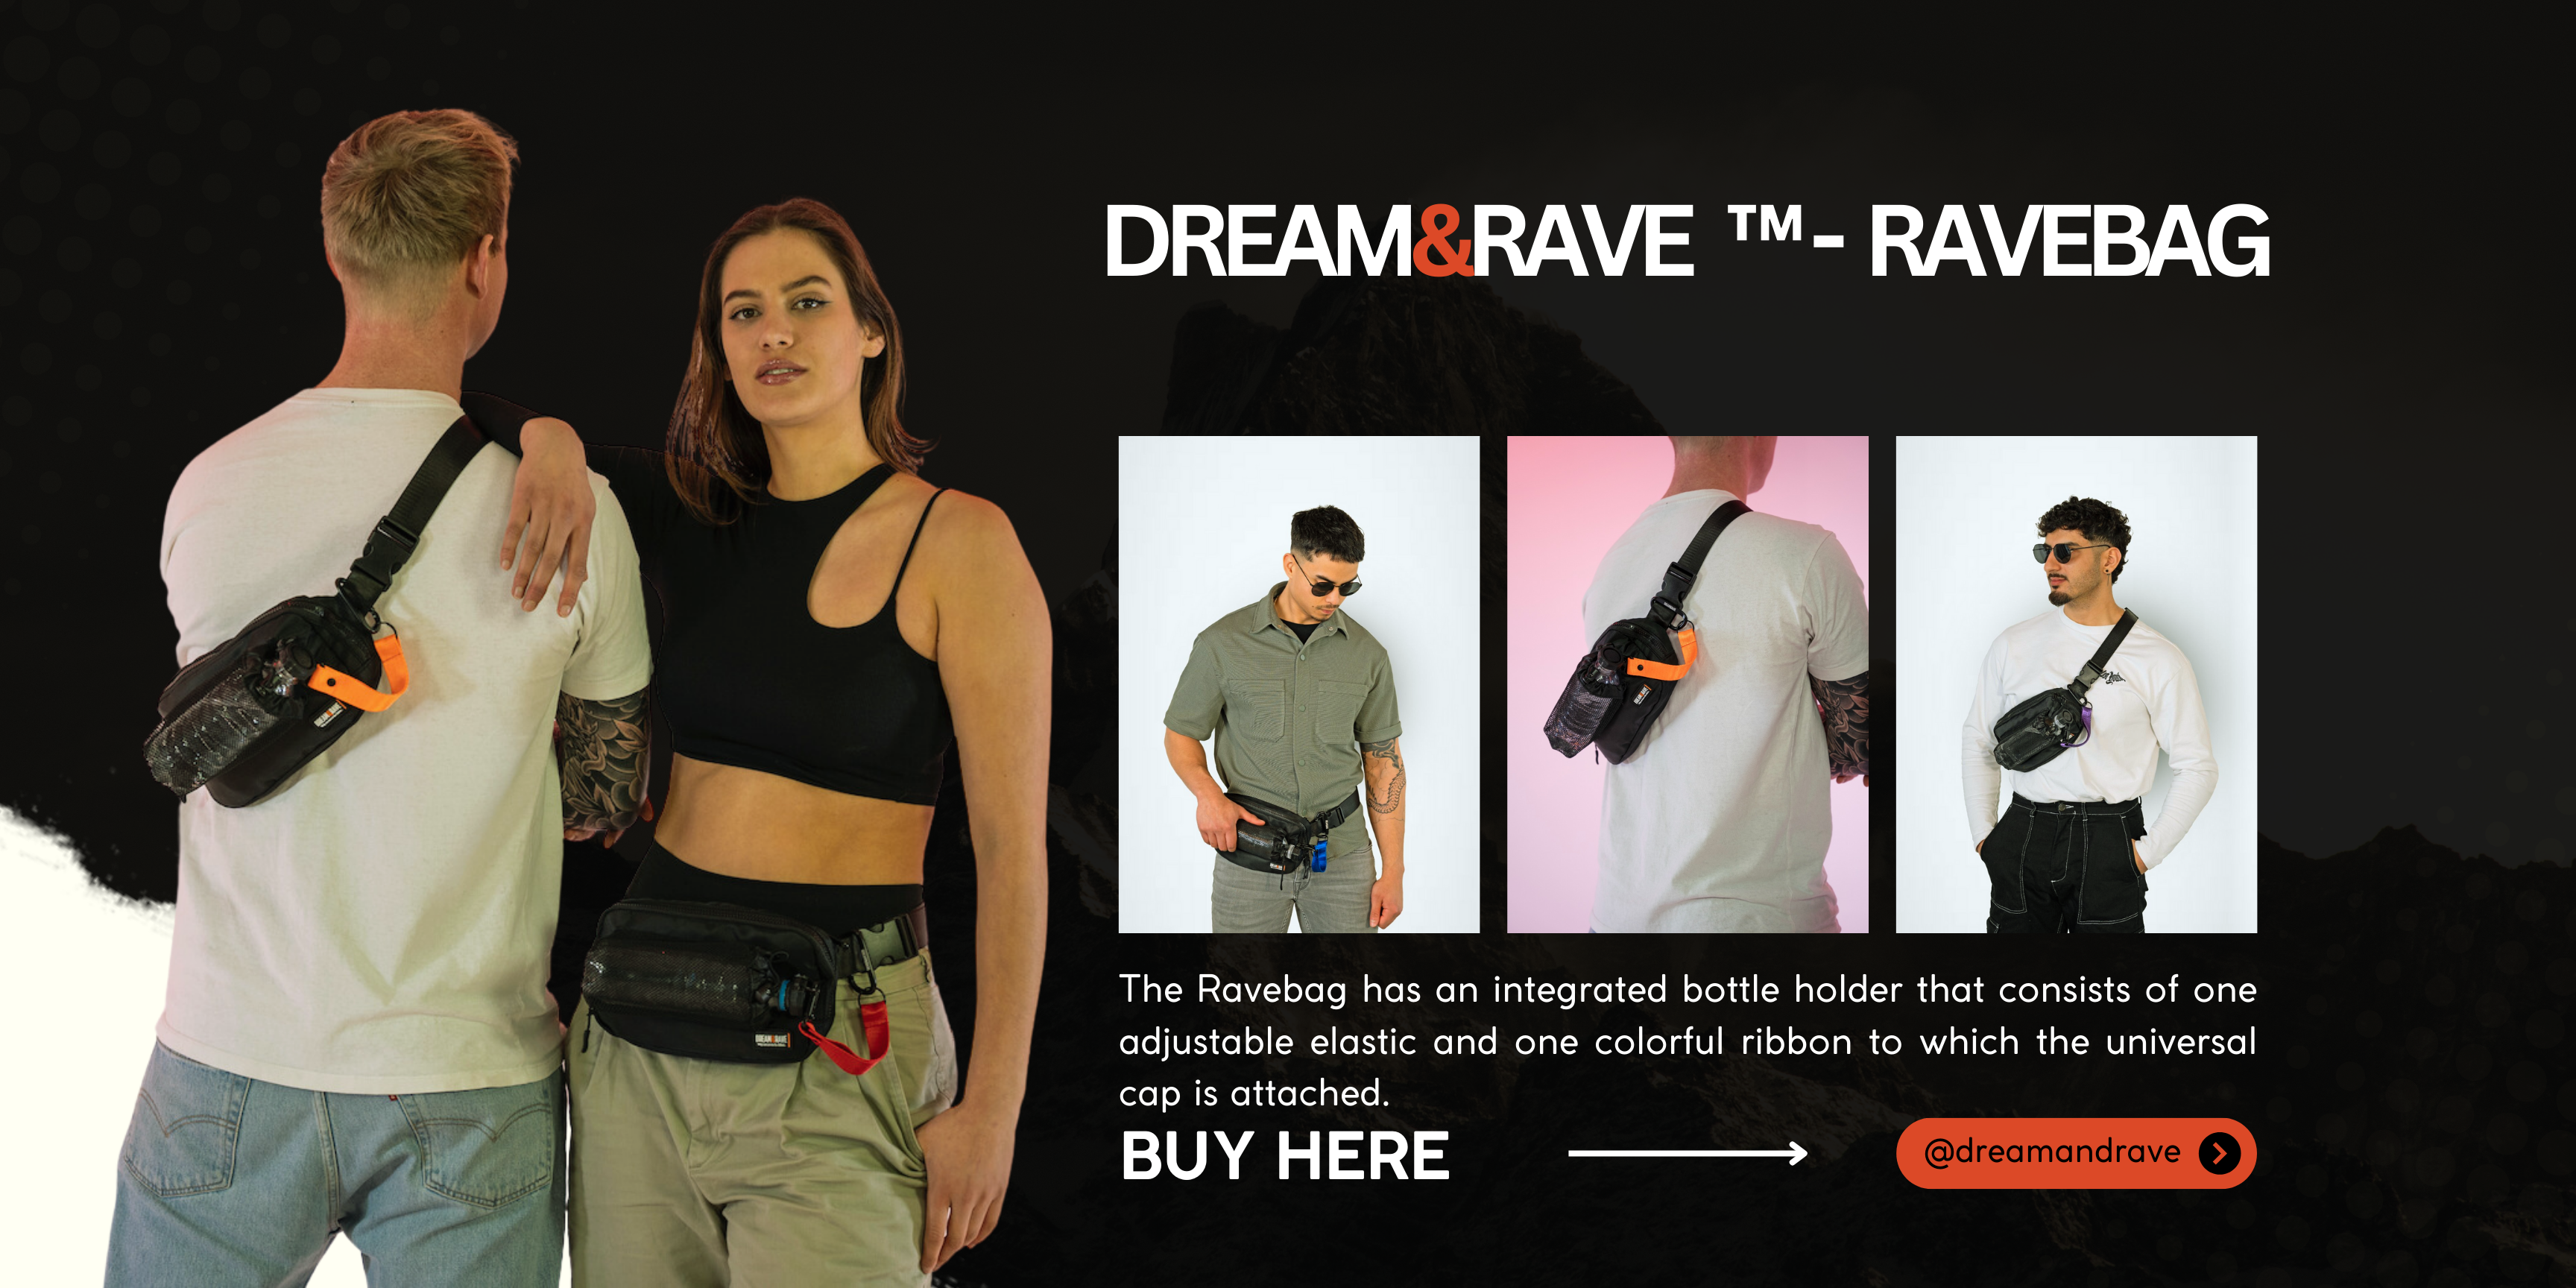 DREAM&RAVE™ - Ravebag